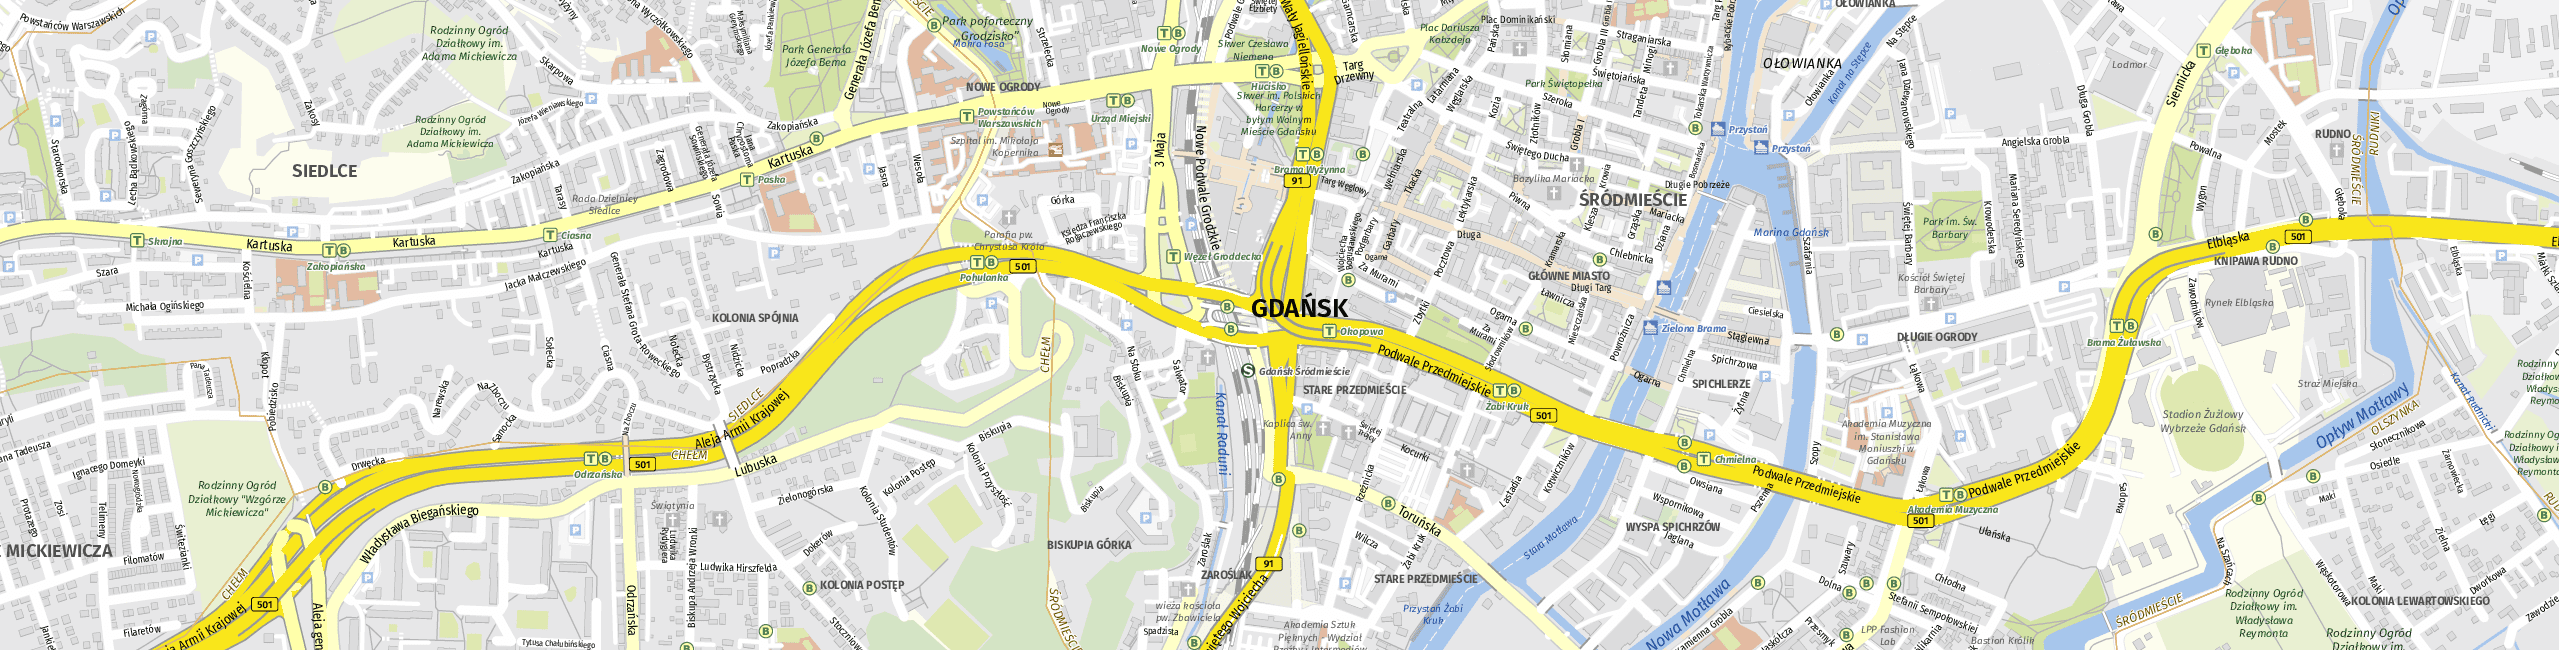 Stadtplan Gdańsk zum Downloaden.